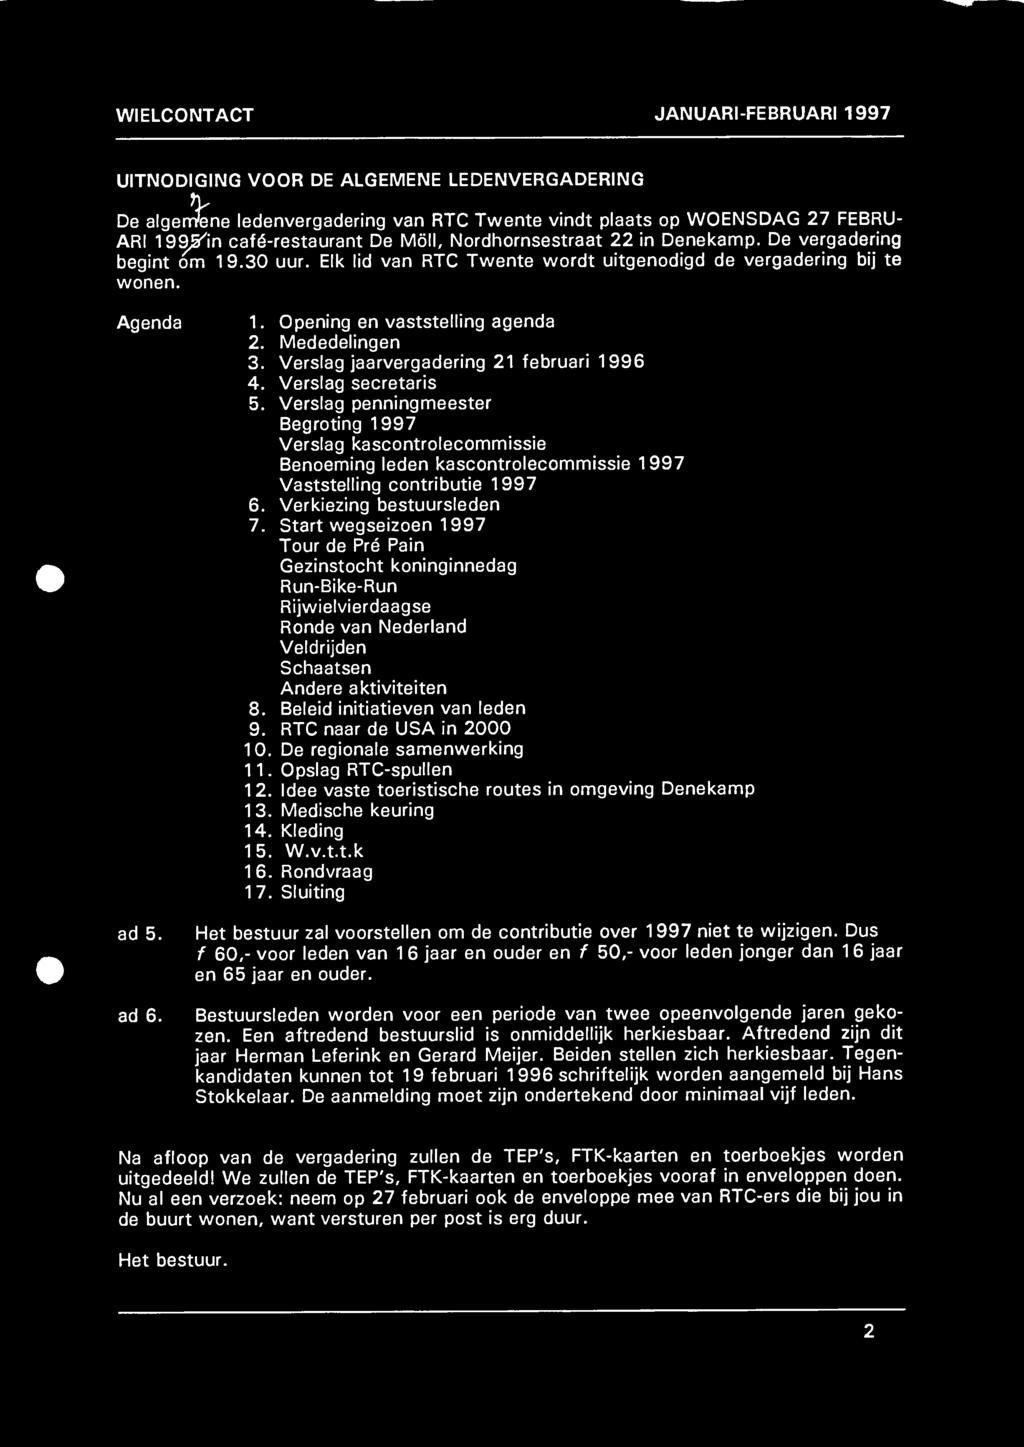 Verslag jaarvergadering 21 februari 1996 4. Verslag secretaris 5.